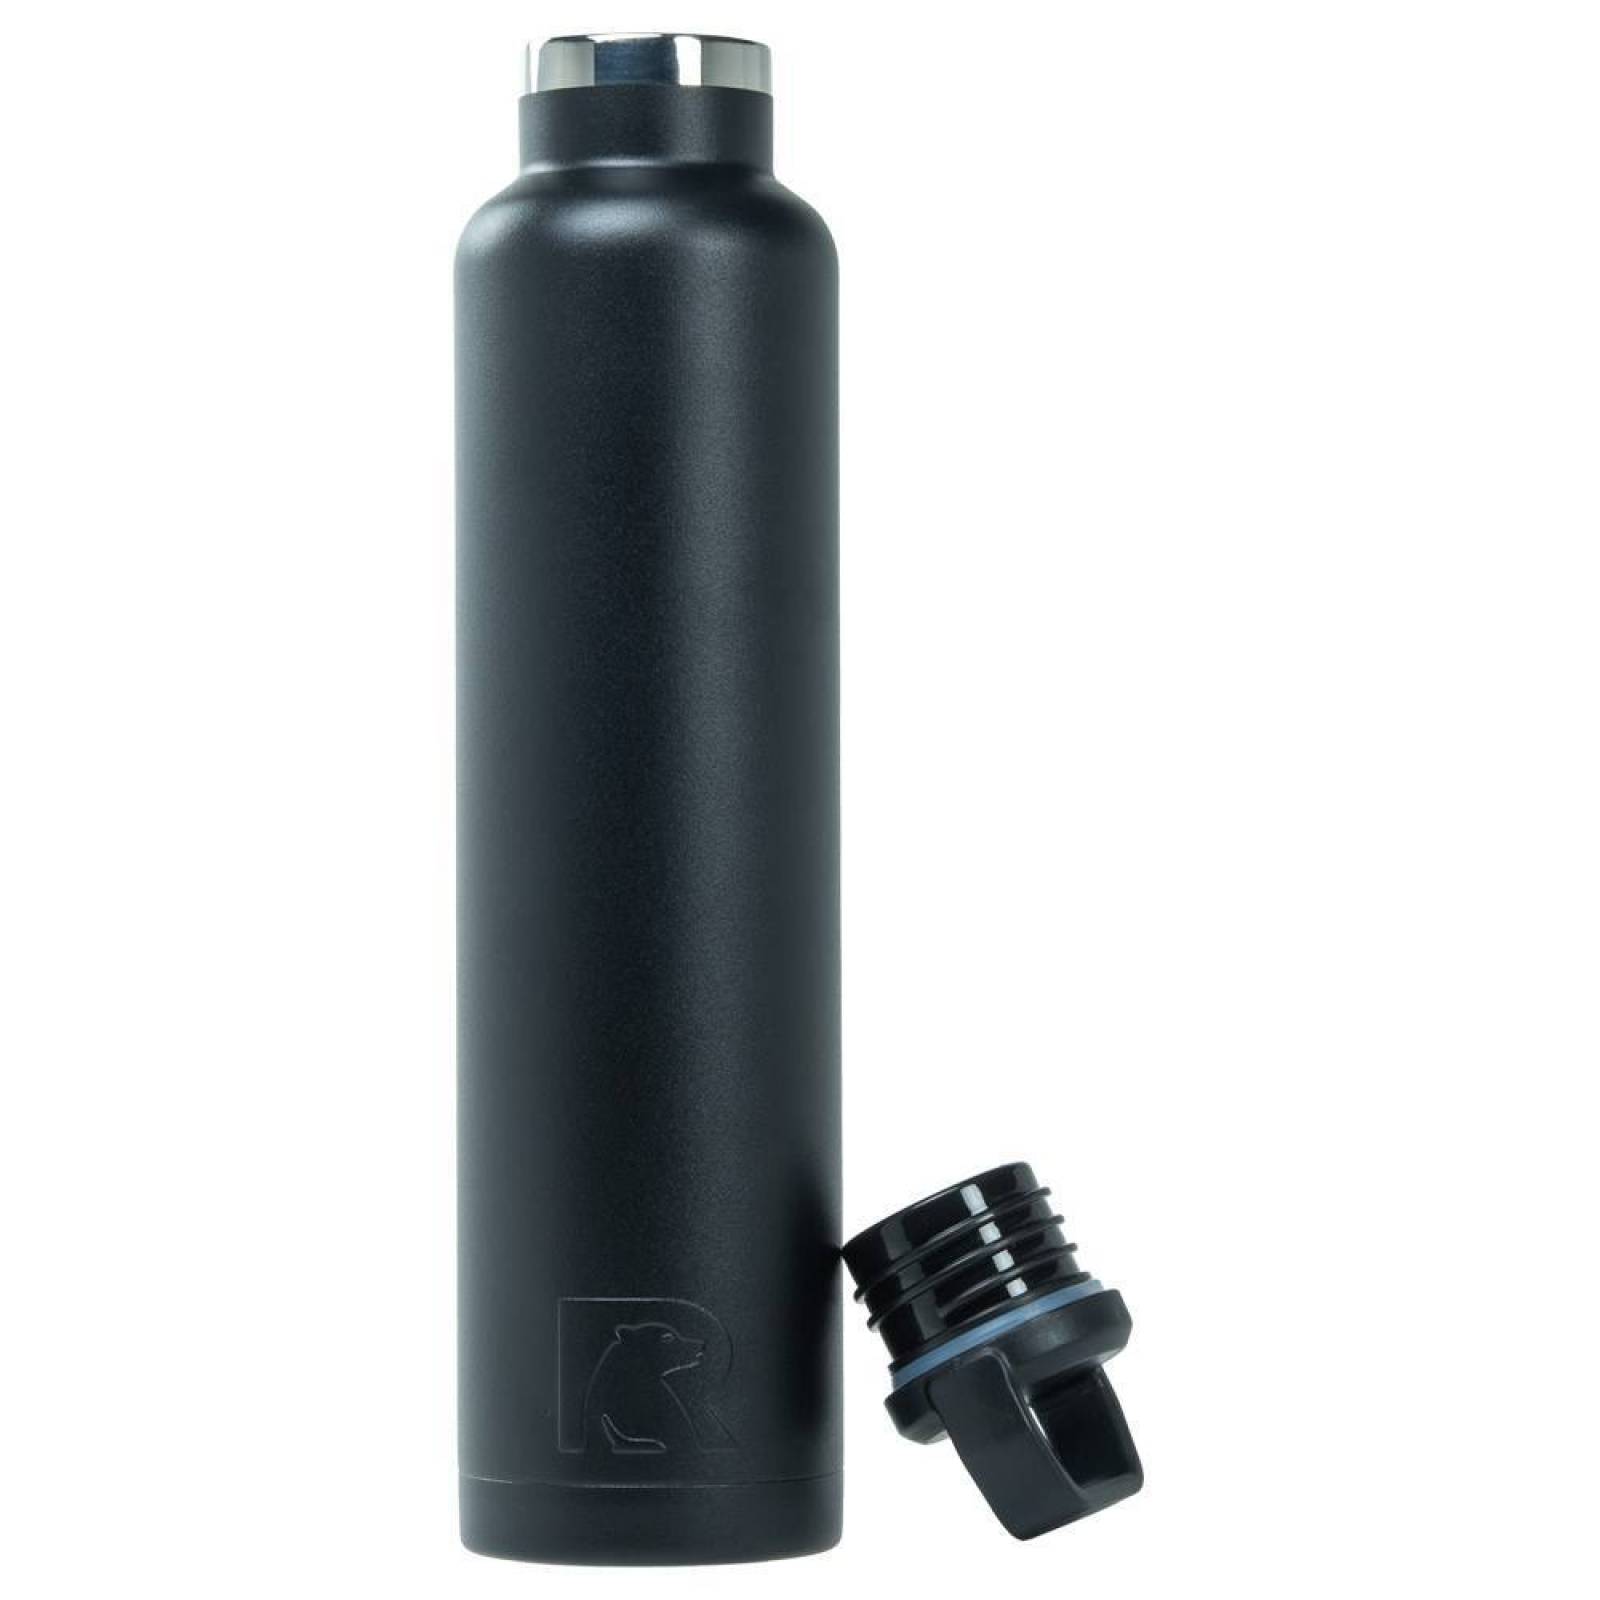 RTIC Water Bottle 26 oz. Black   689